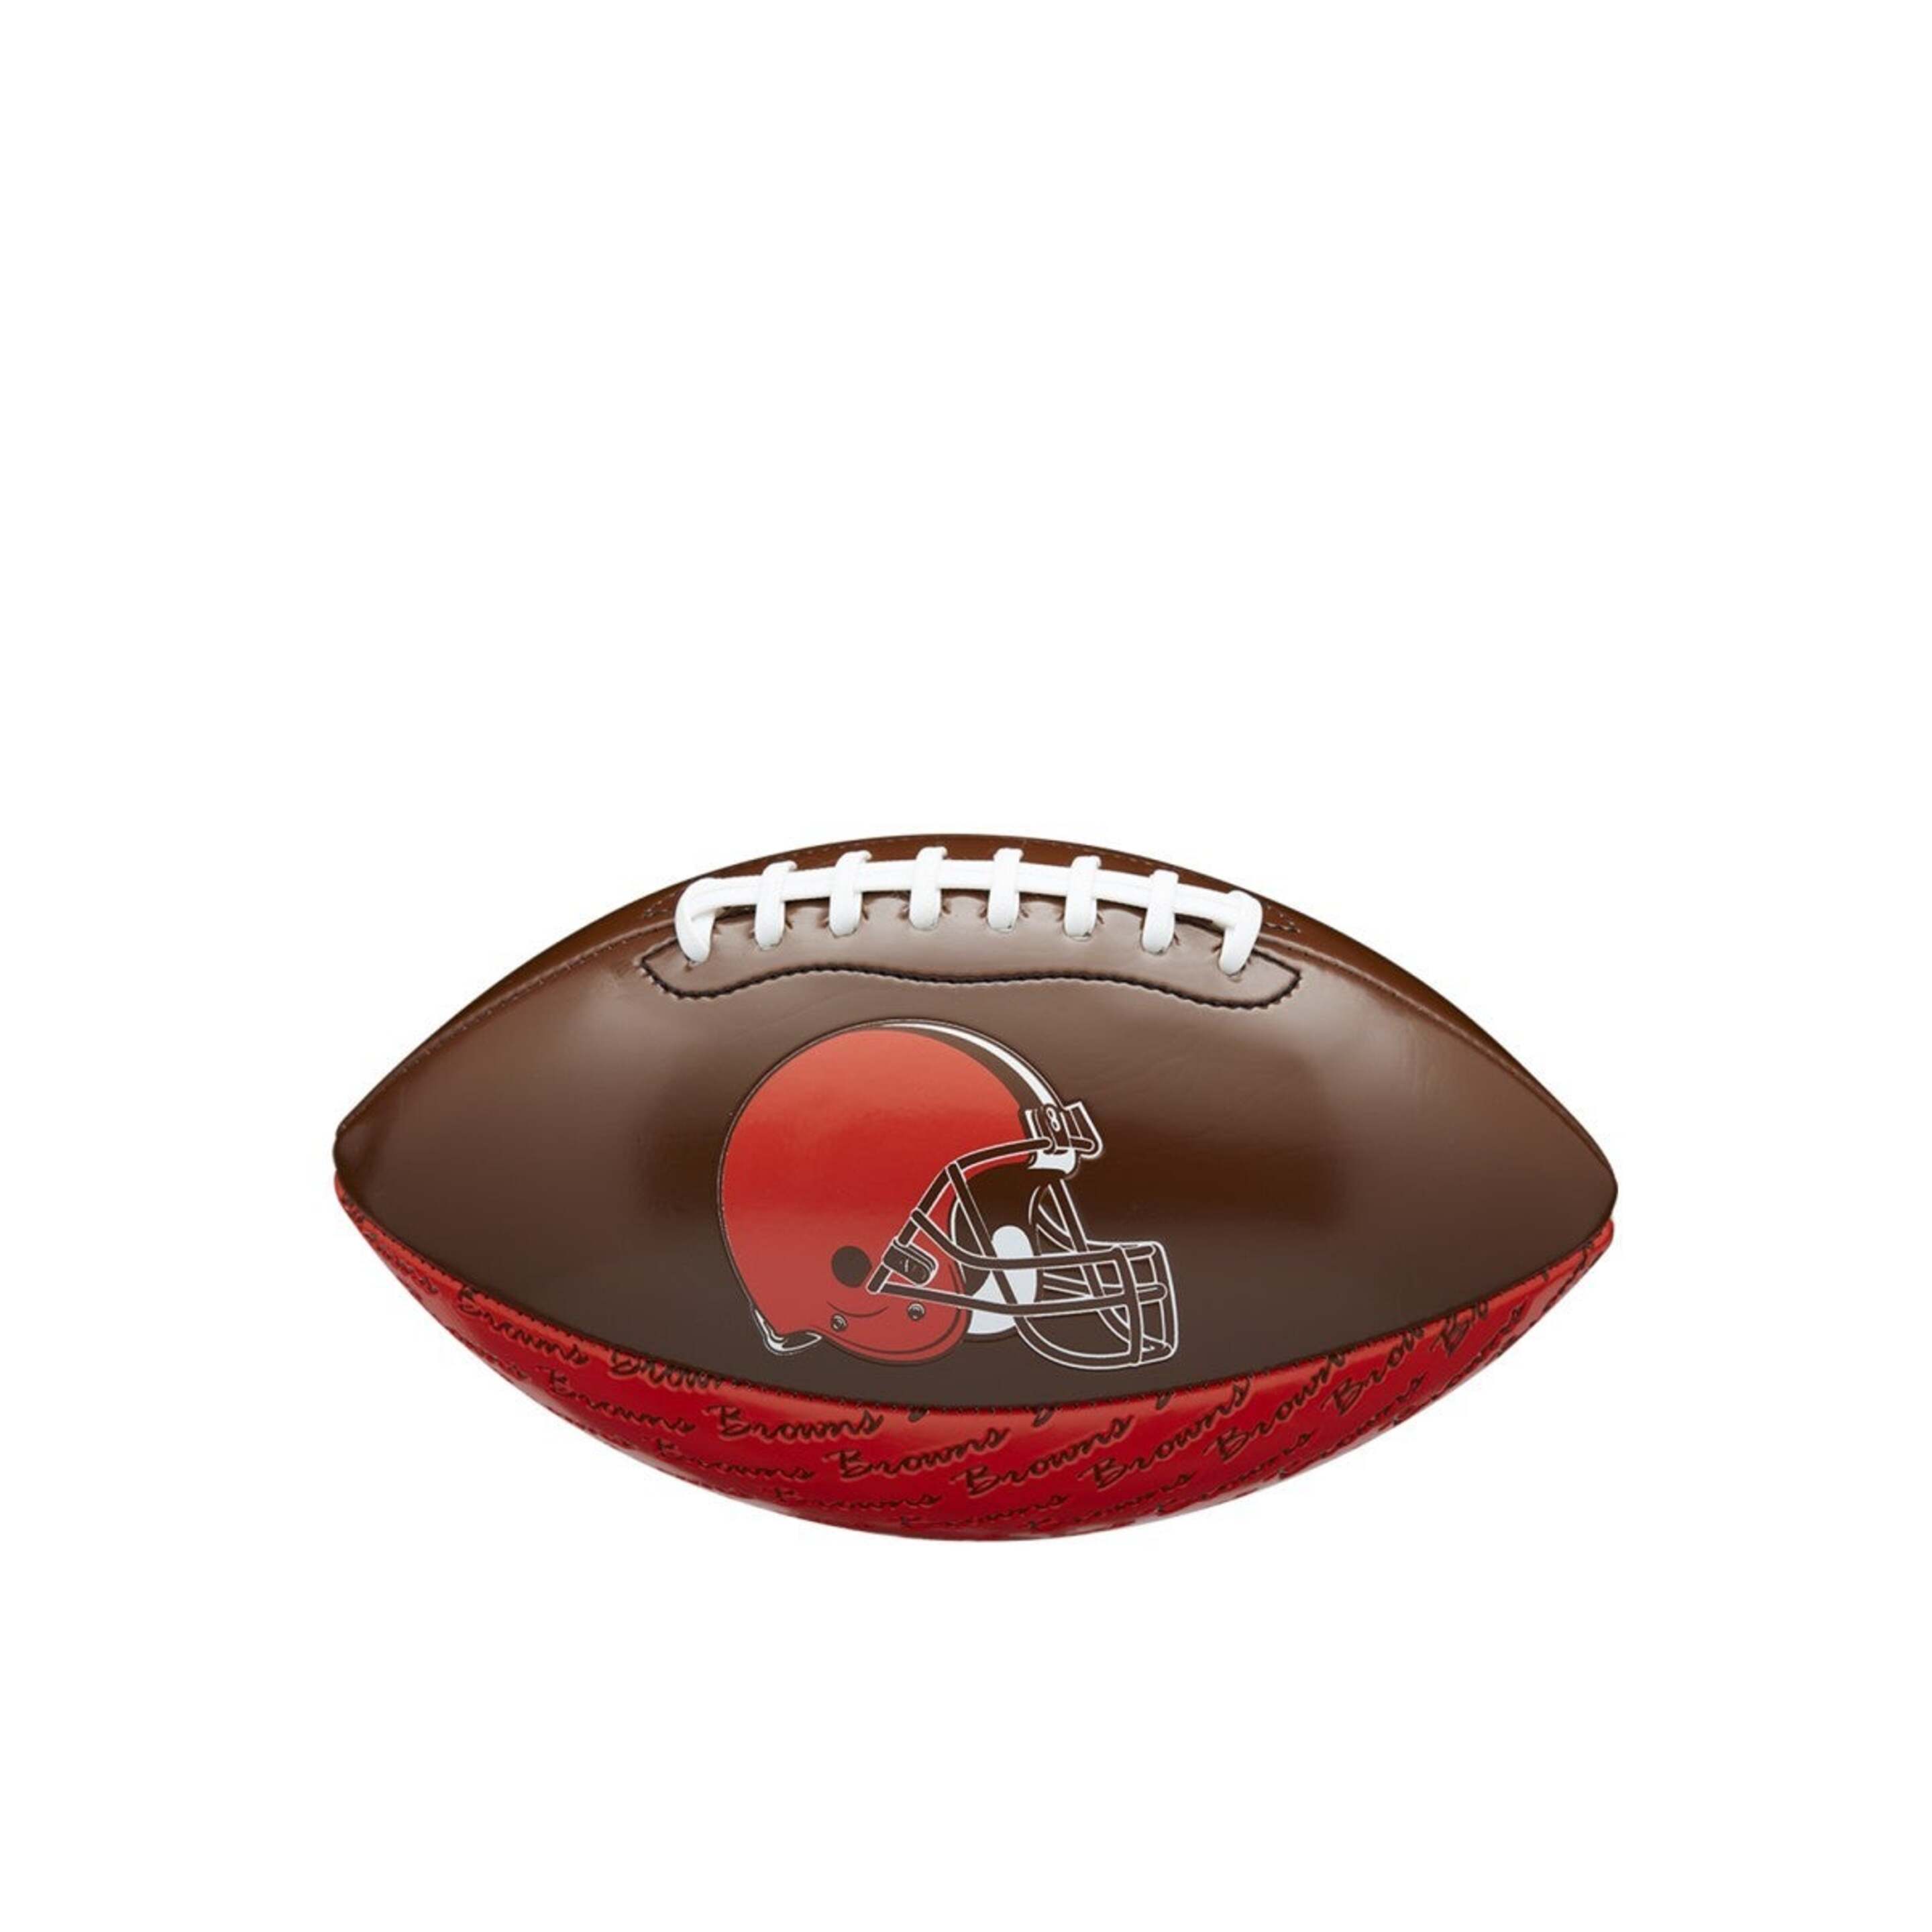 Mini Balón Infantil Nfl Cleveland Browns - Marron  MKP